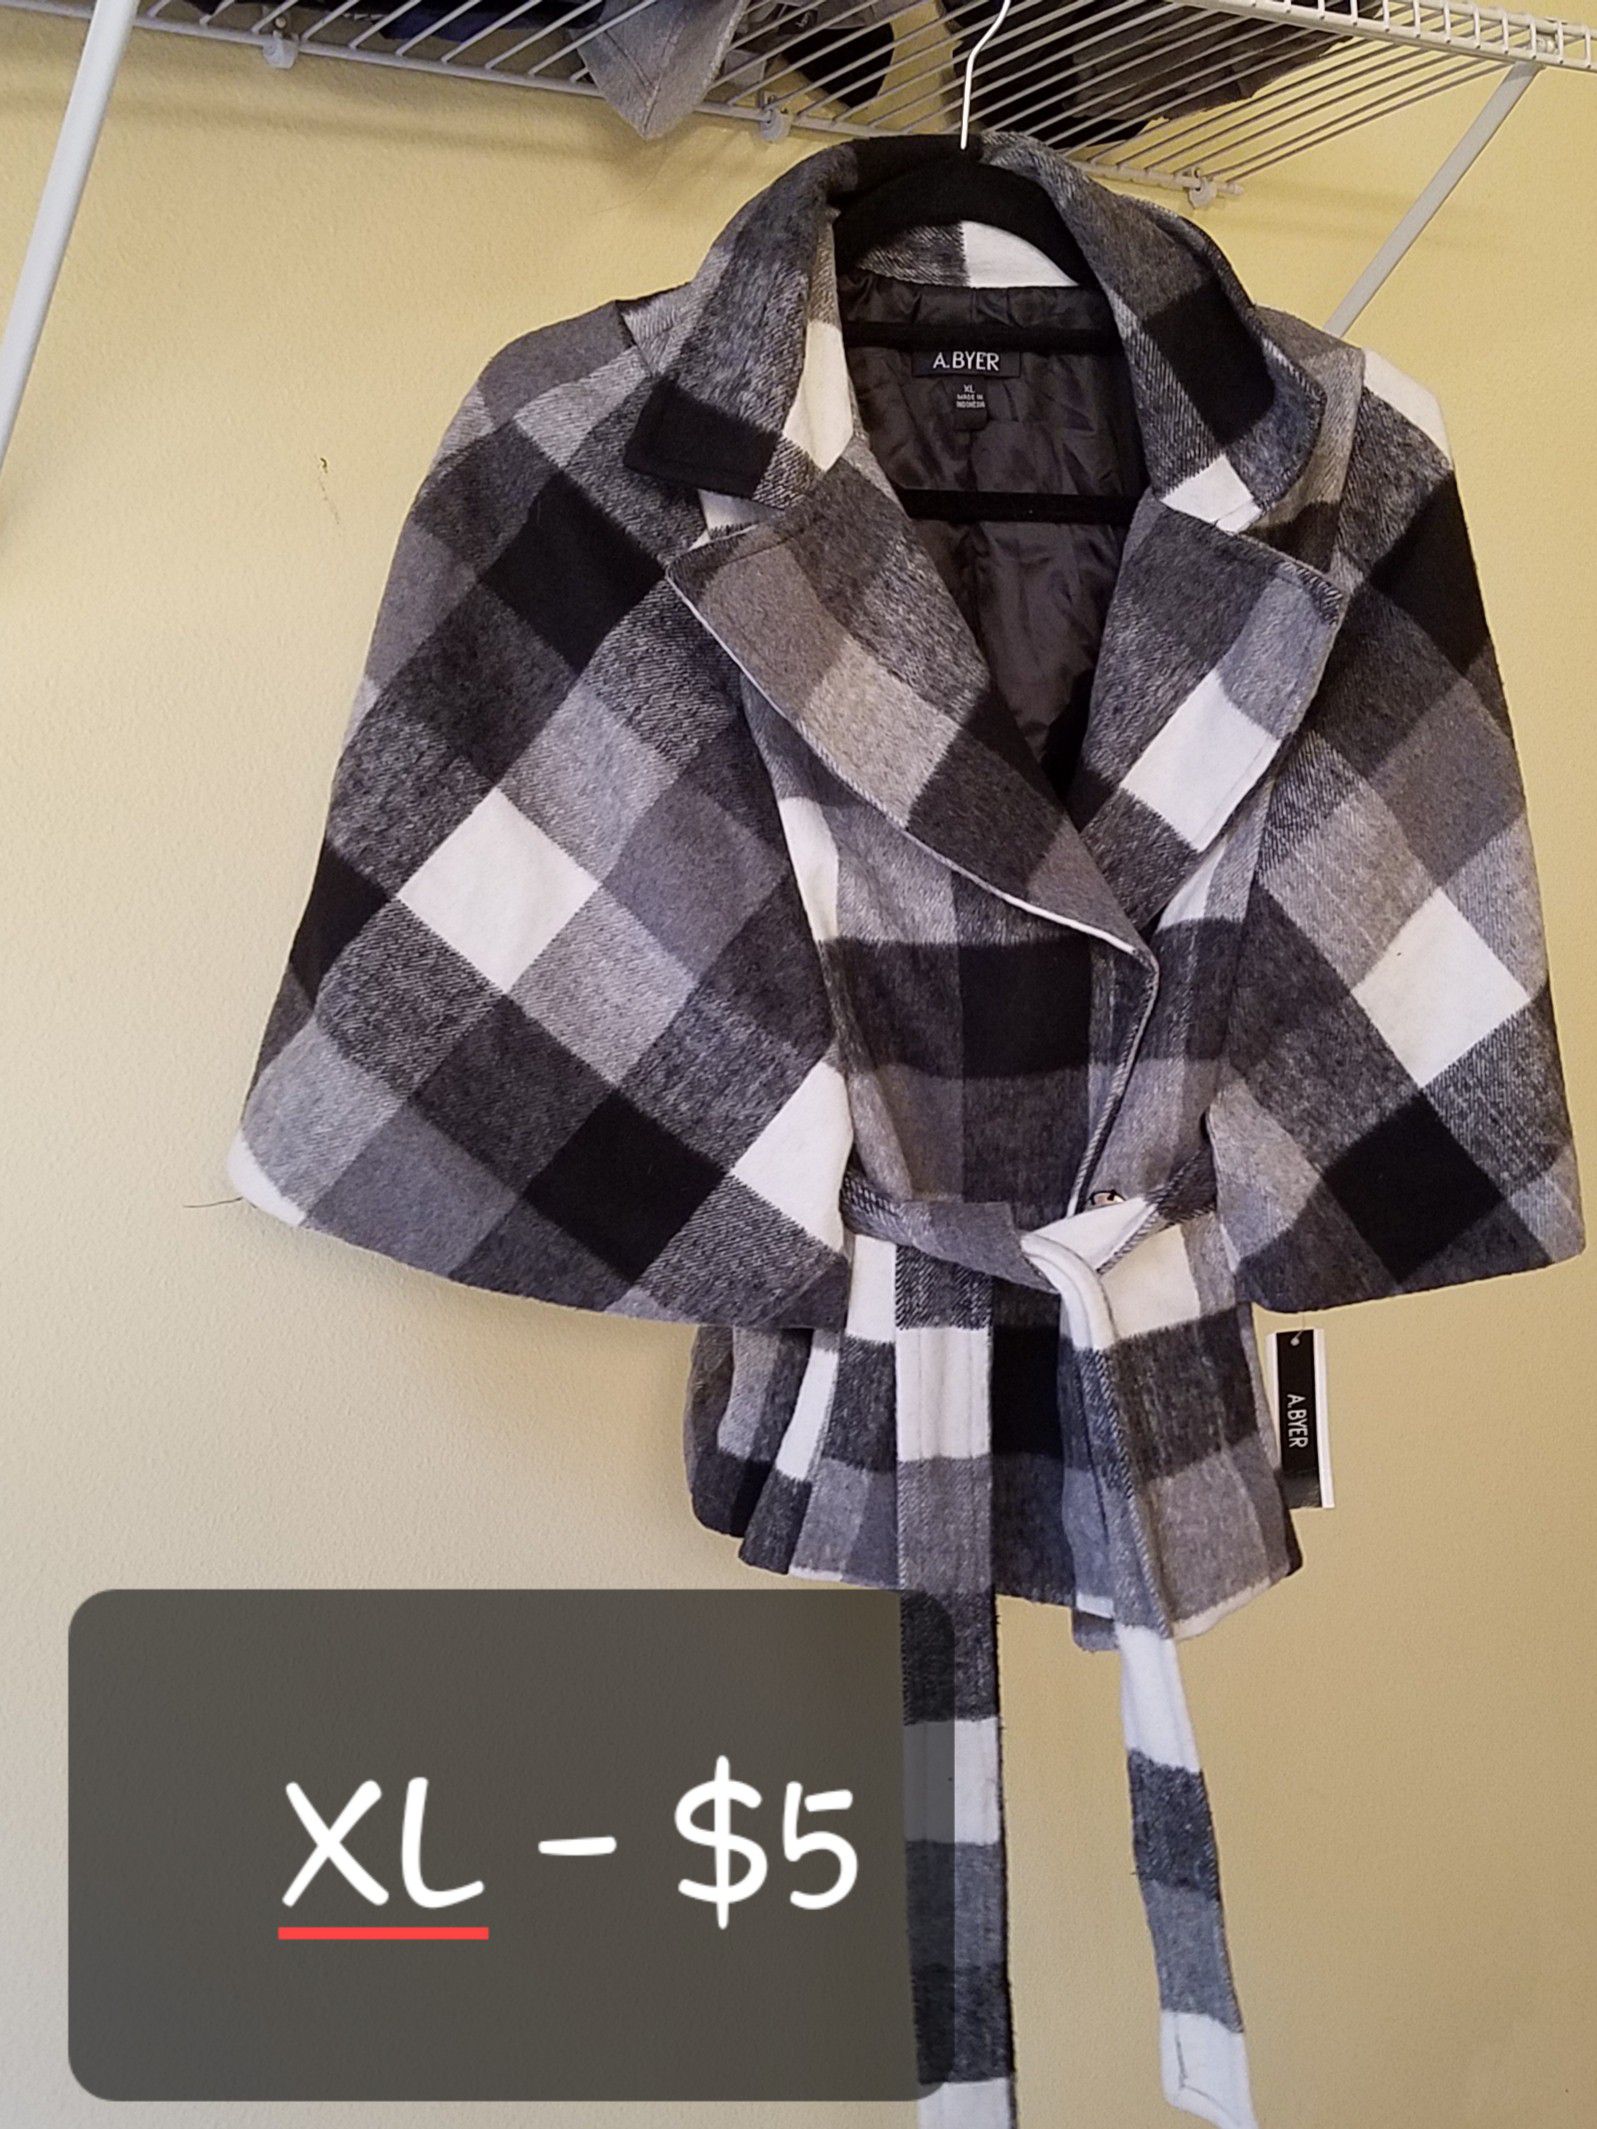 A Buyer Poncho Jacket Size XL